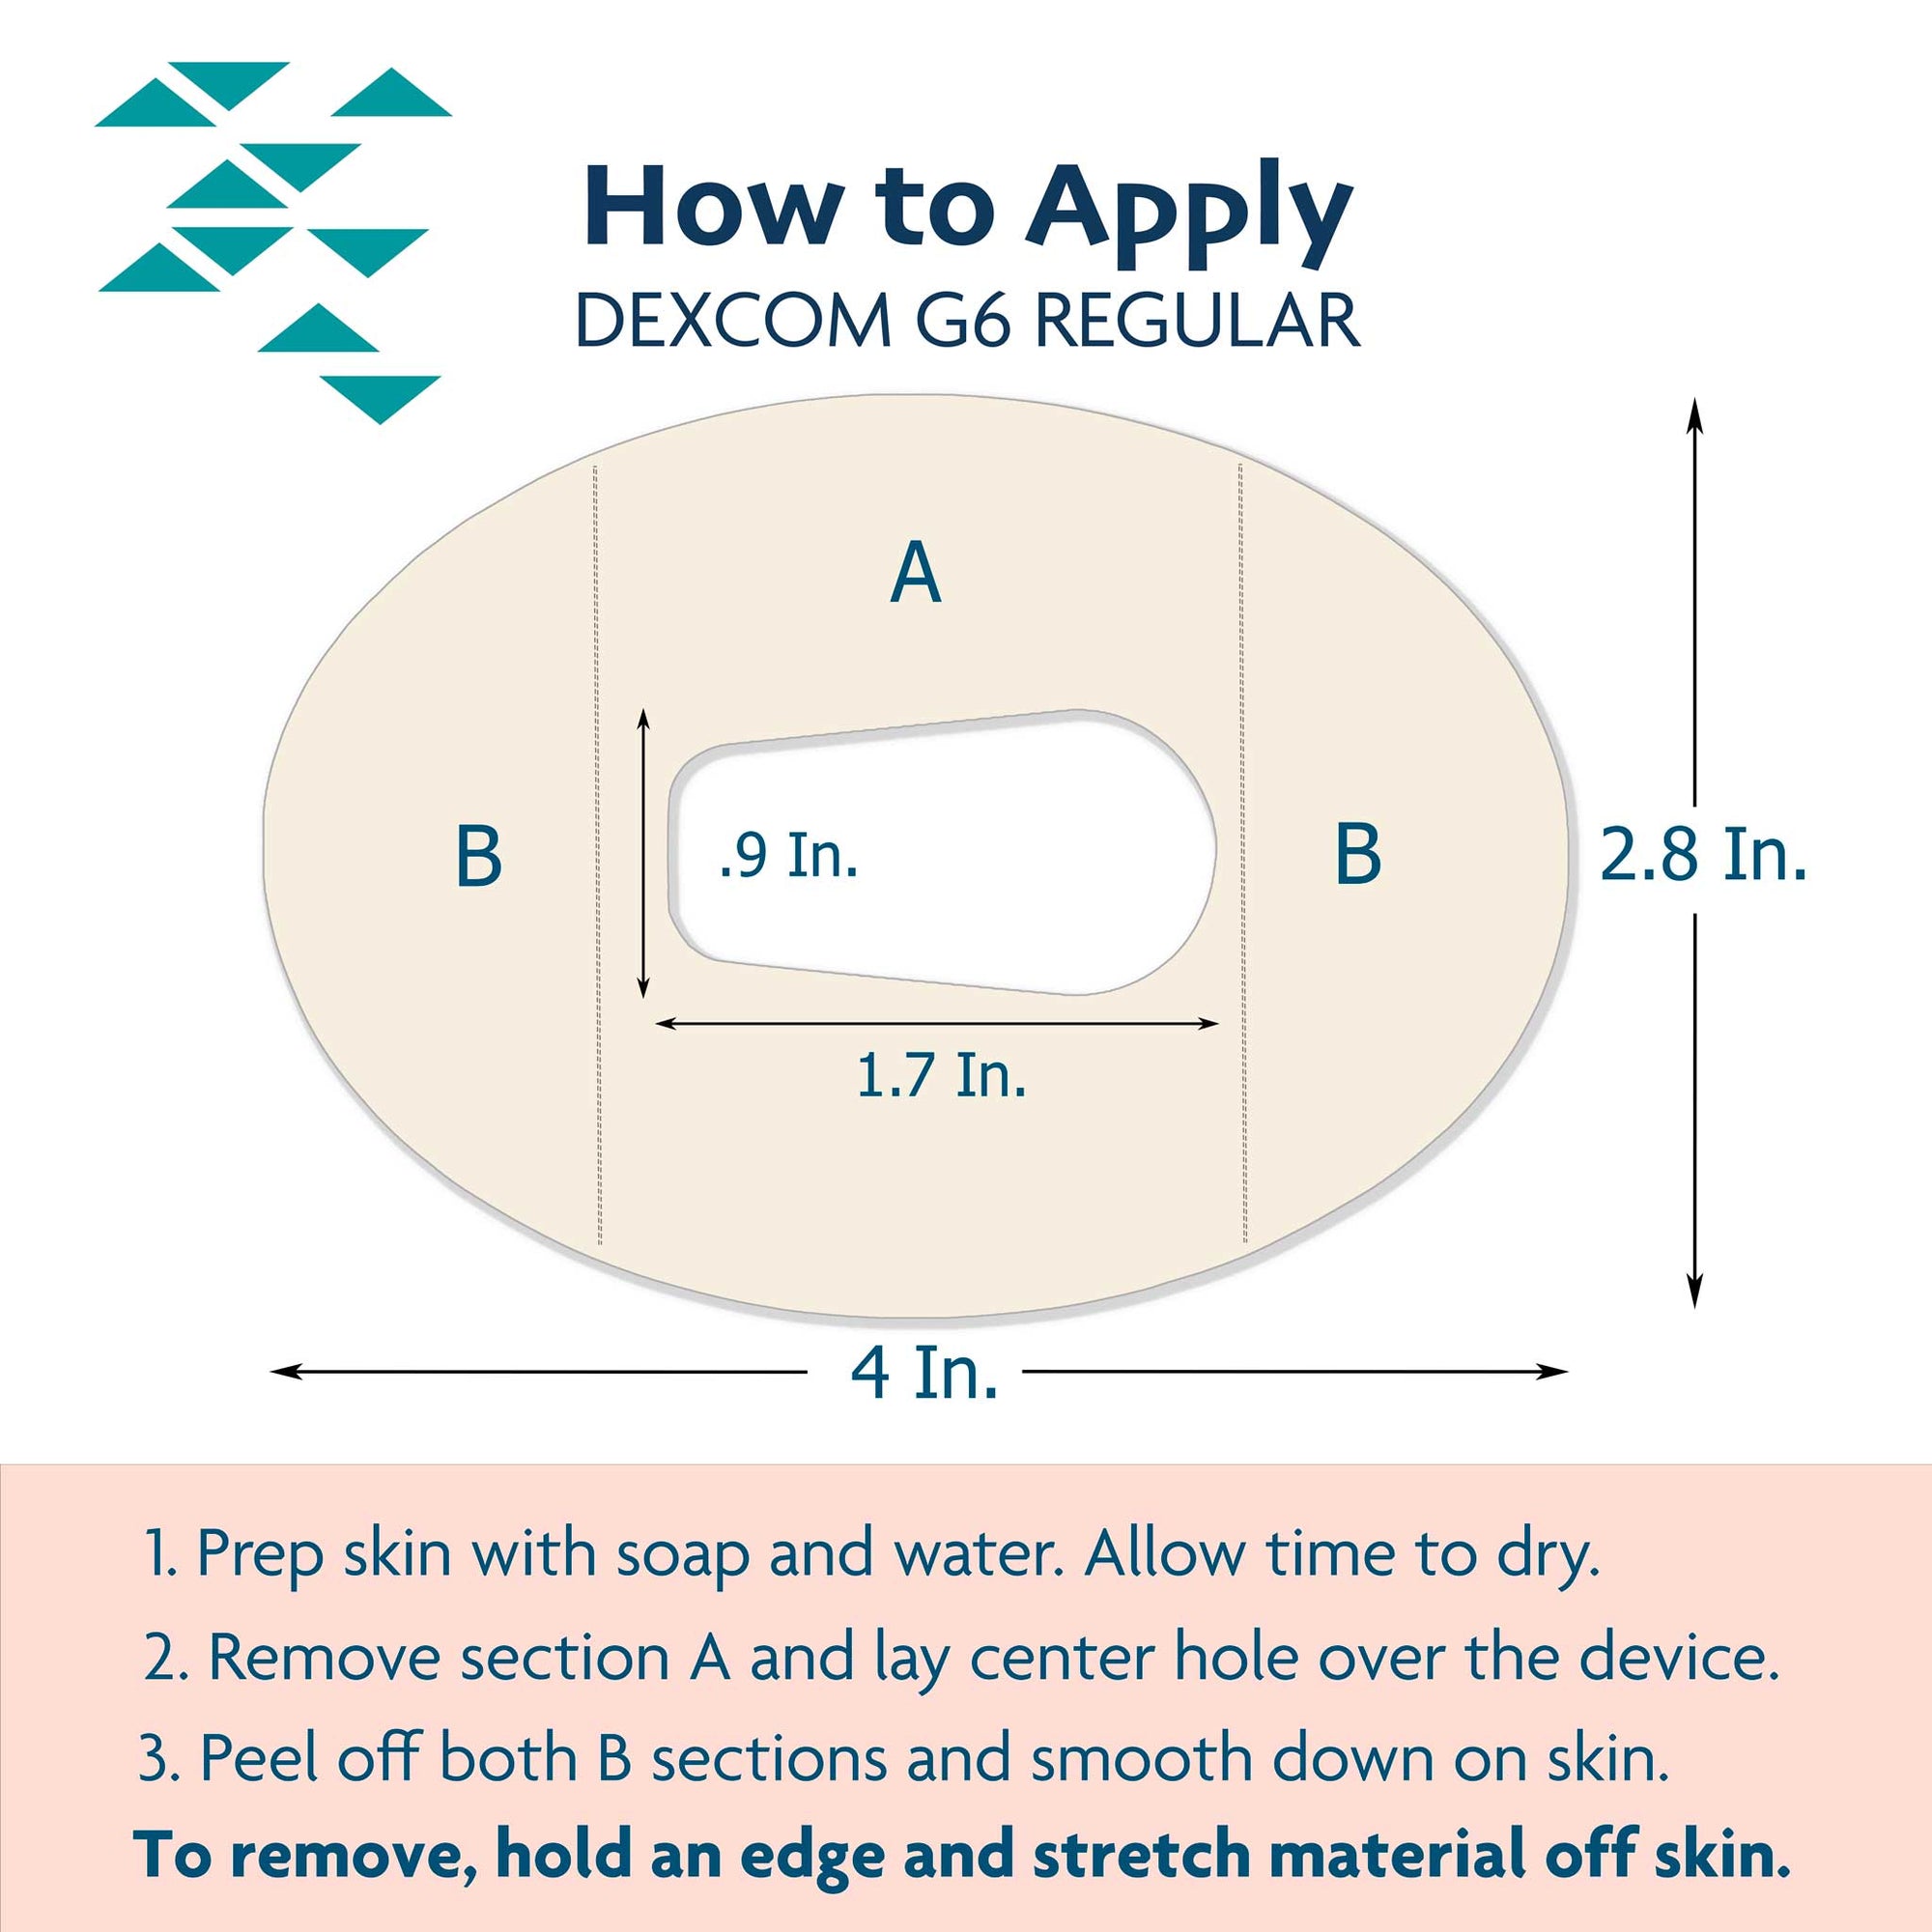 Dexcom G6 Patch instructions for proper application